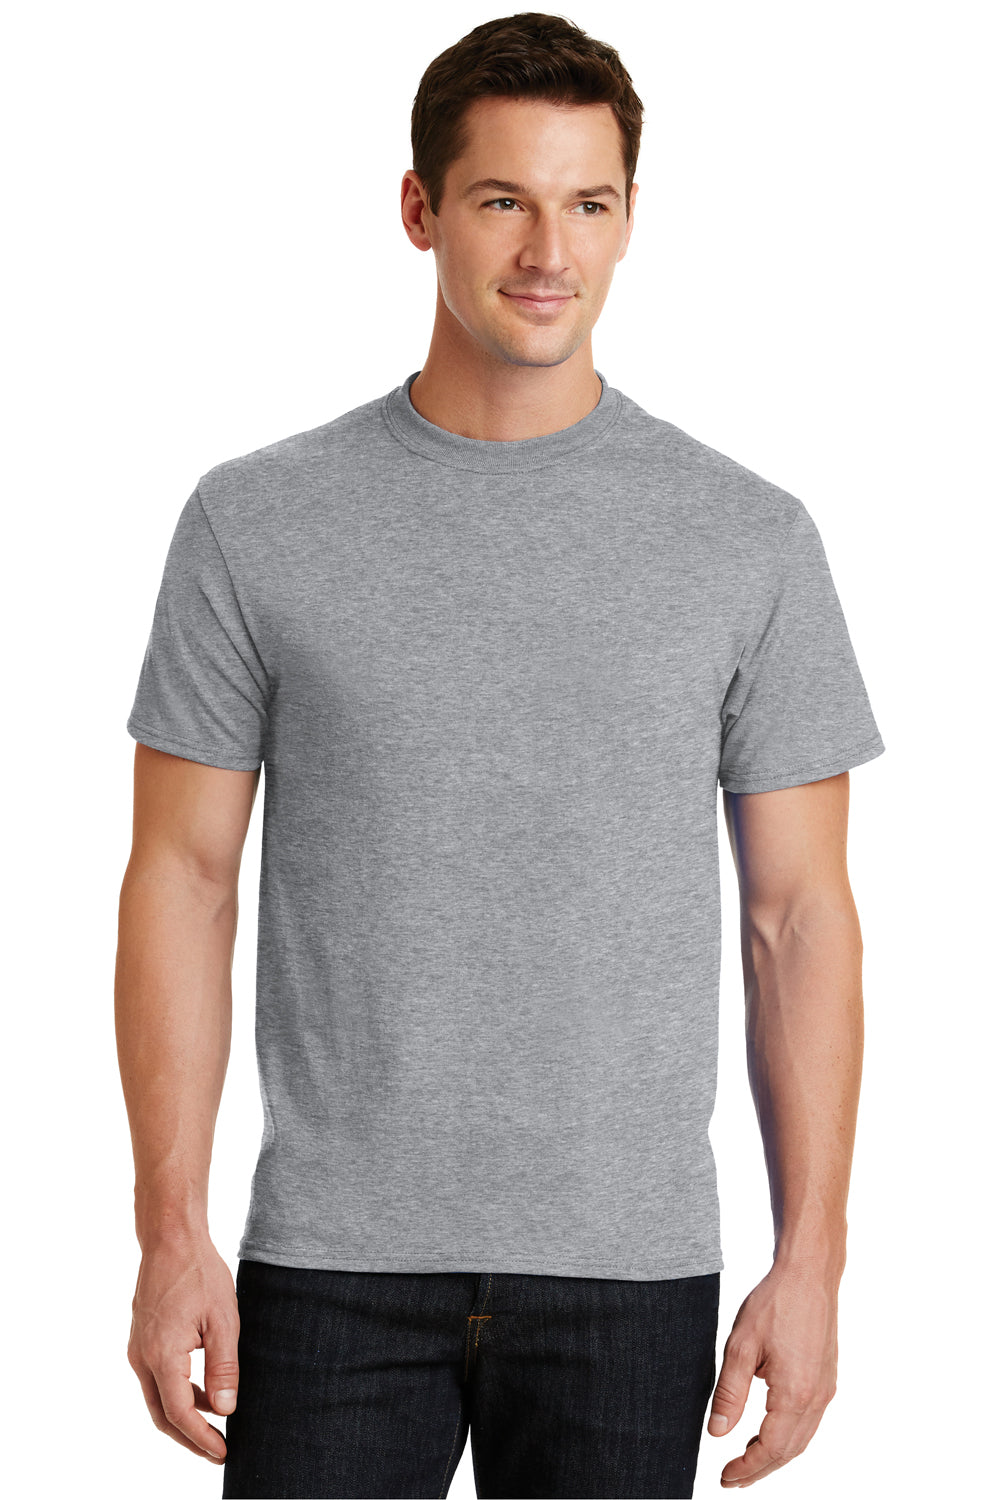 Port & Company PC55 Mens Core Short Sleeve Crewneck T-Shirt Heather Grey Front